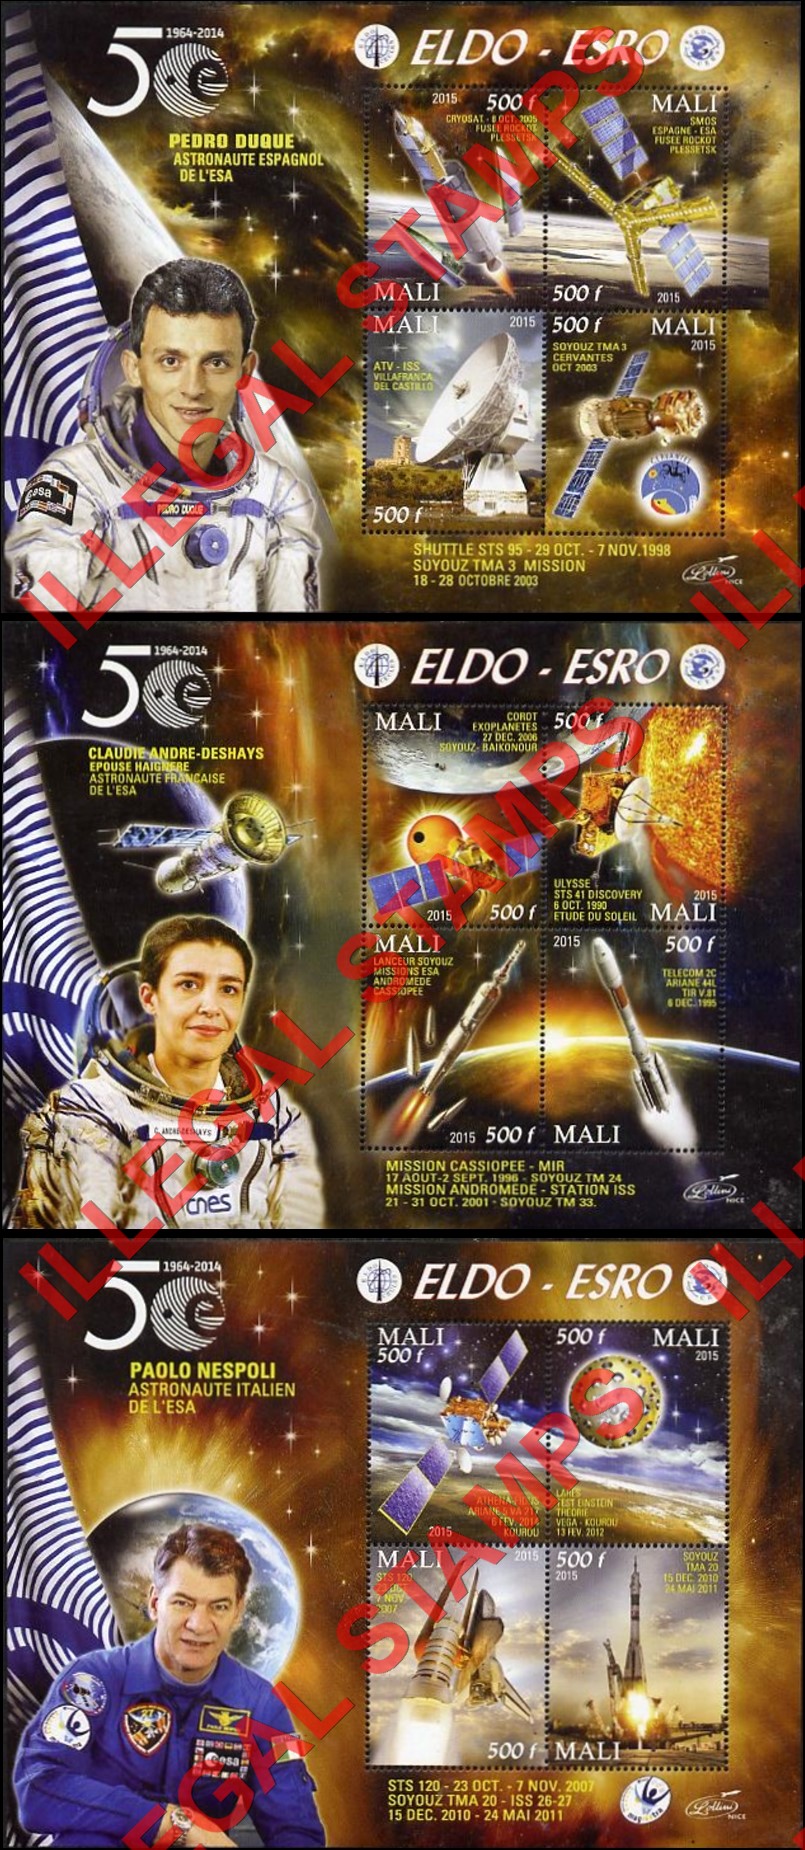 Mali 2015 Space ELDO-ESRO Illegal Stamp Souvenir Sheets of 4 (Part 1)